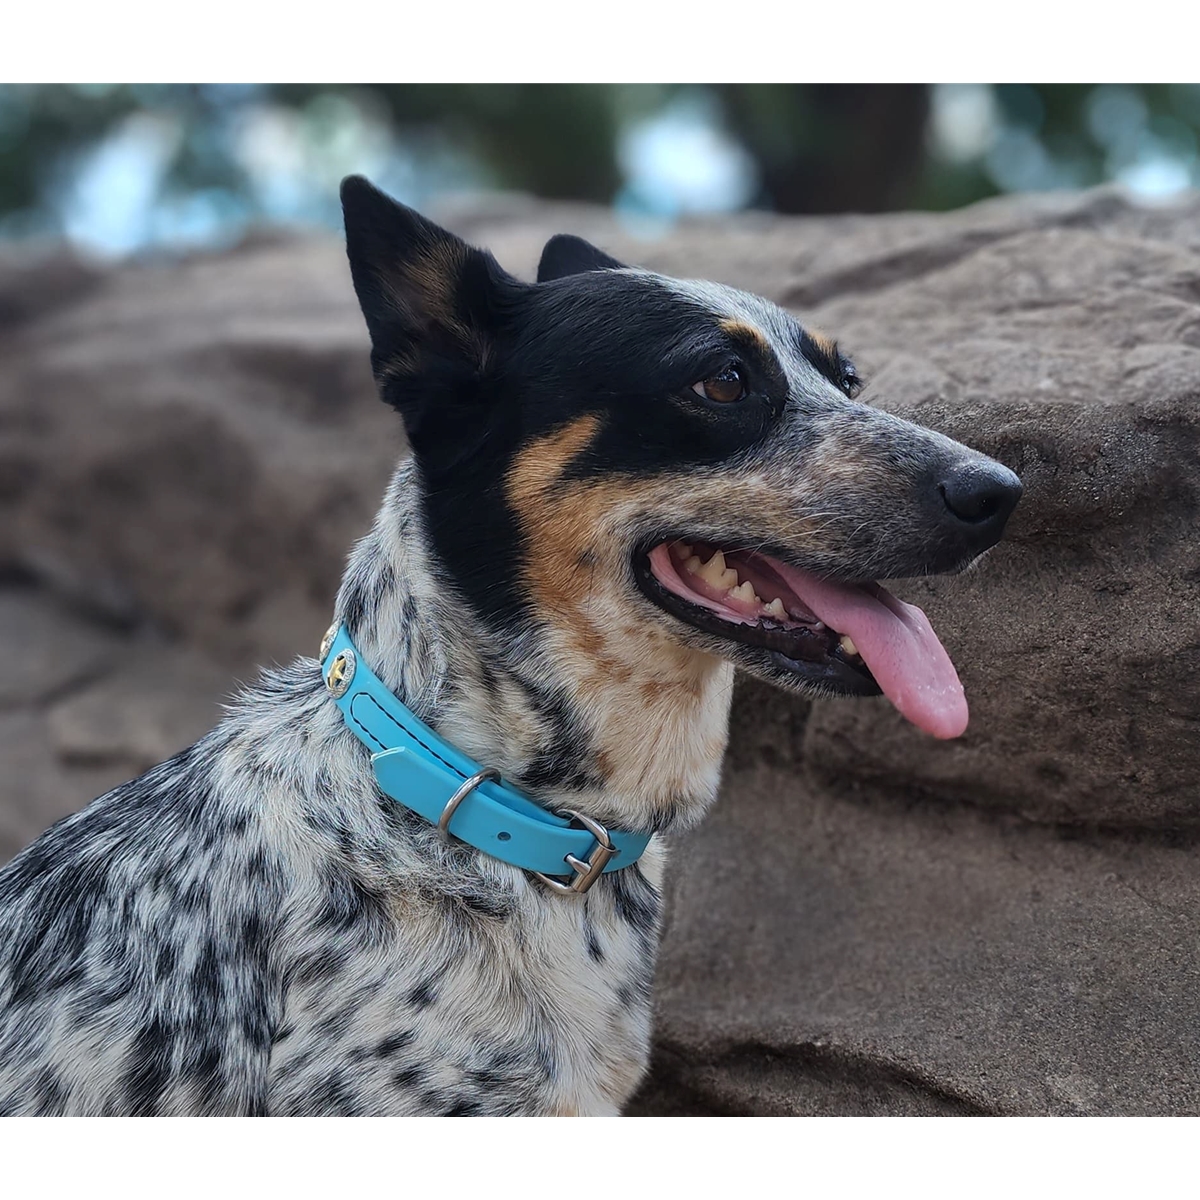 Personalized Blue Italian Leather Dog Collar - Large